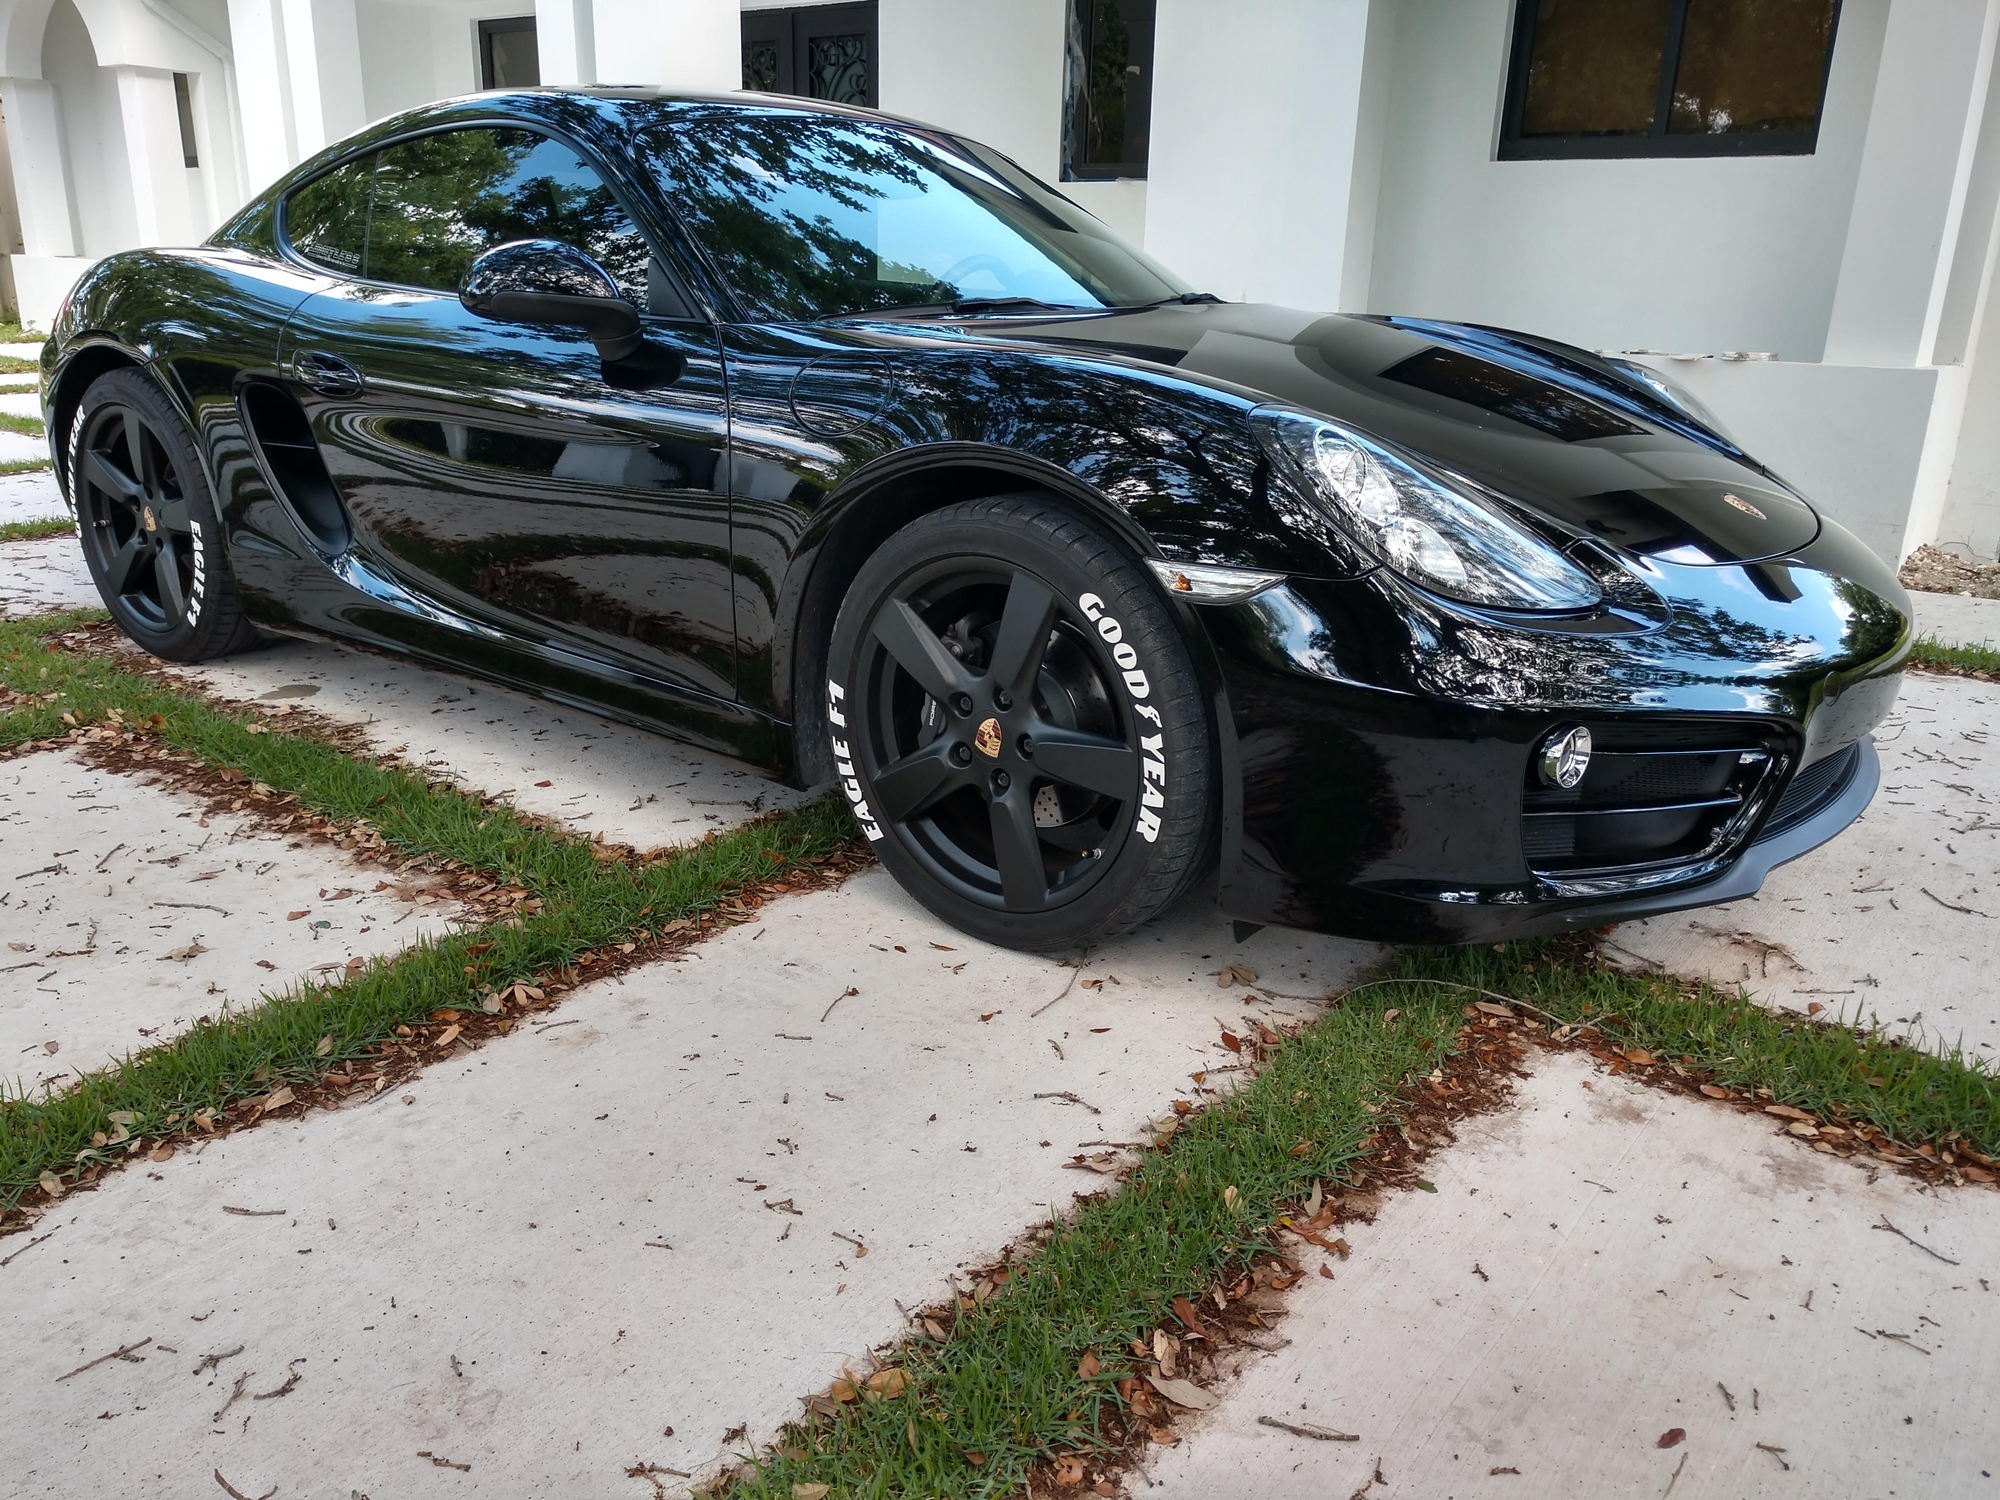 2014 Porsche Cayman - 2014 Black Porsche Cayman Base - Used - VIN WP0AA2A86EK173714 - 19,350 Miles - 6 cyl - 2WD - Manual - Coupe - Black - Miami, FL 33173, United States